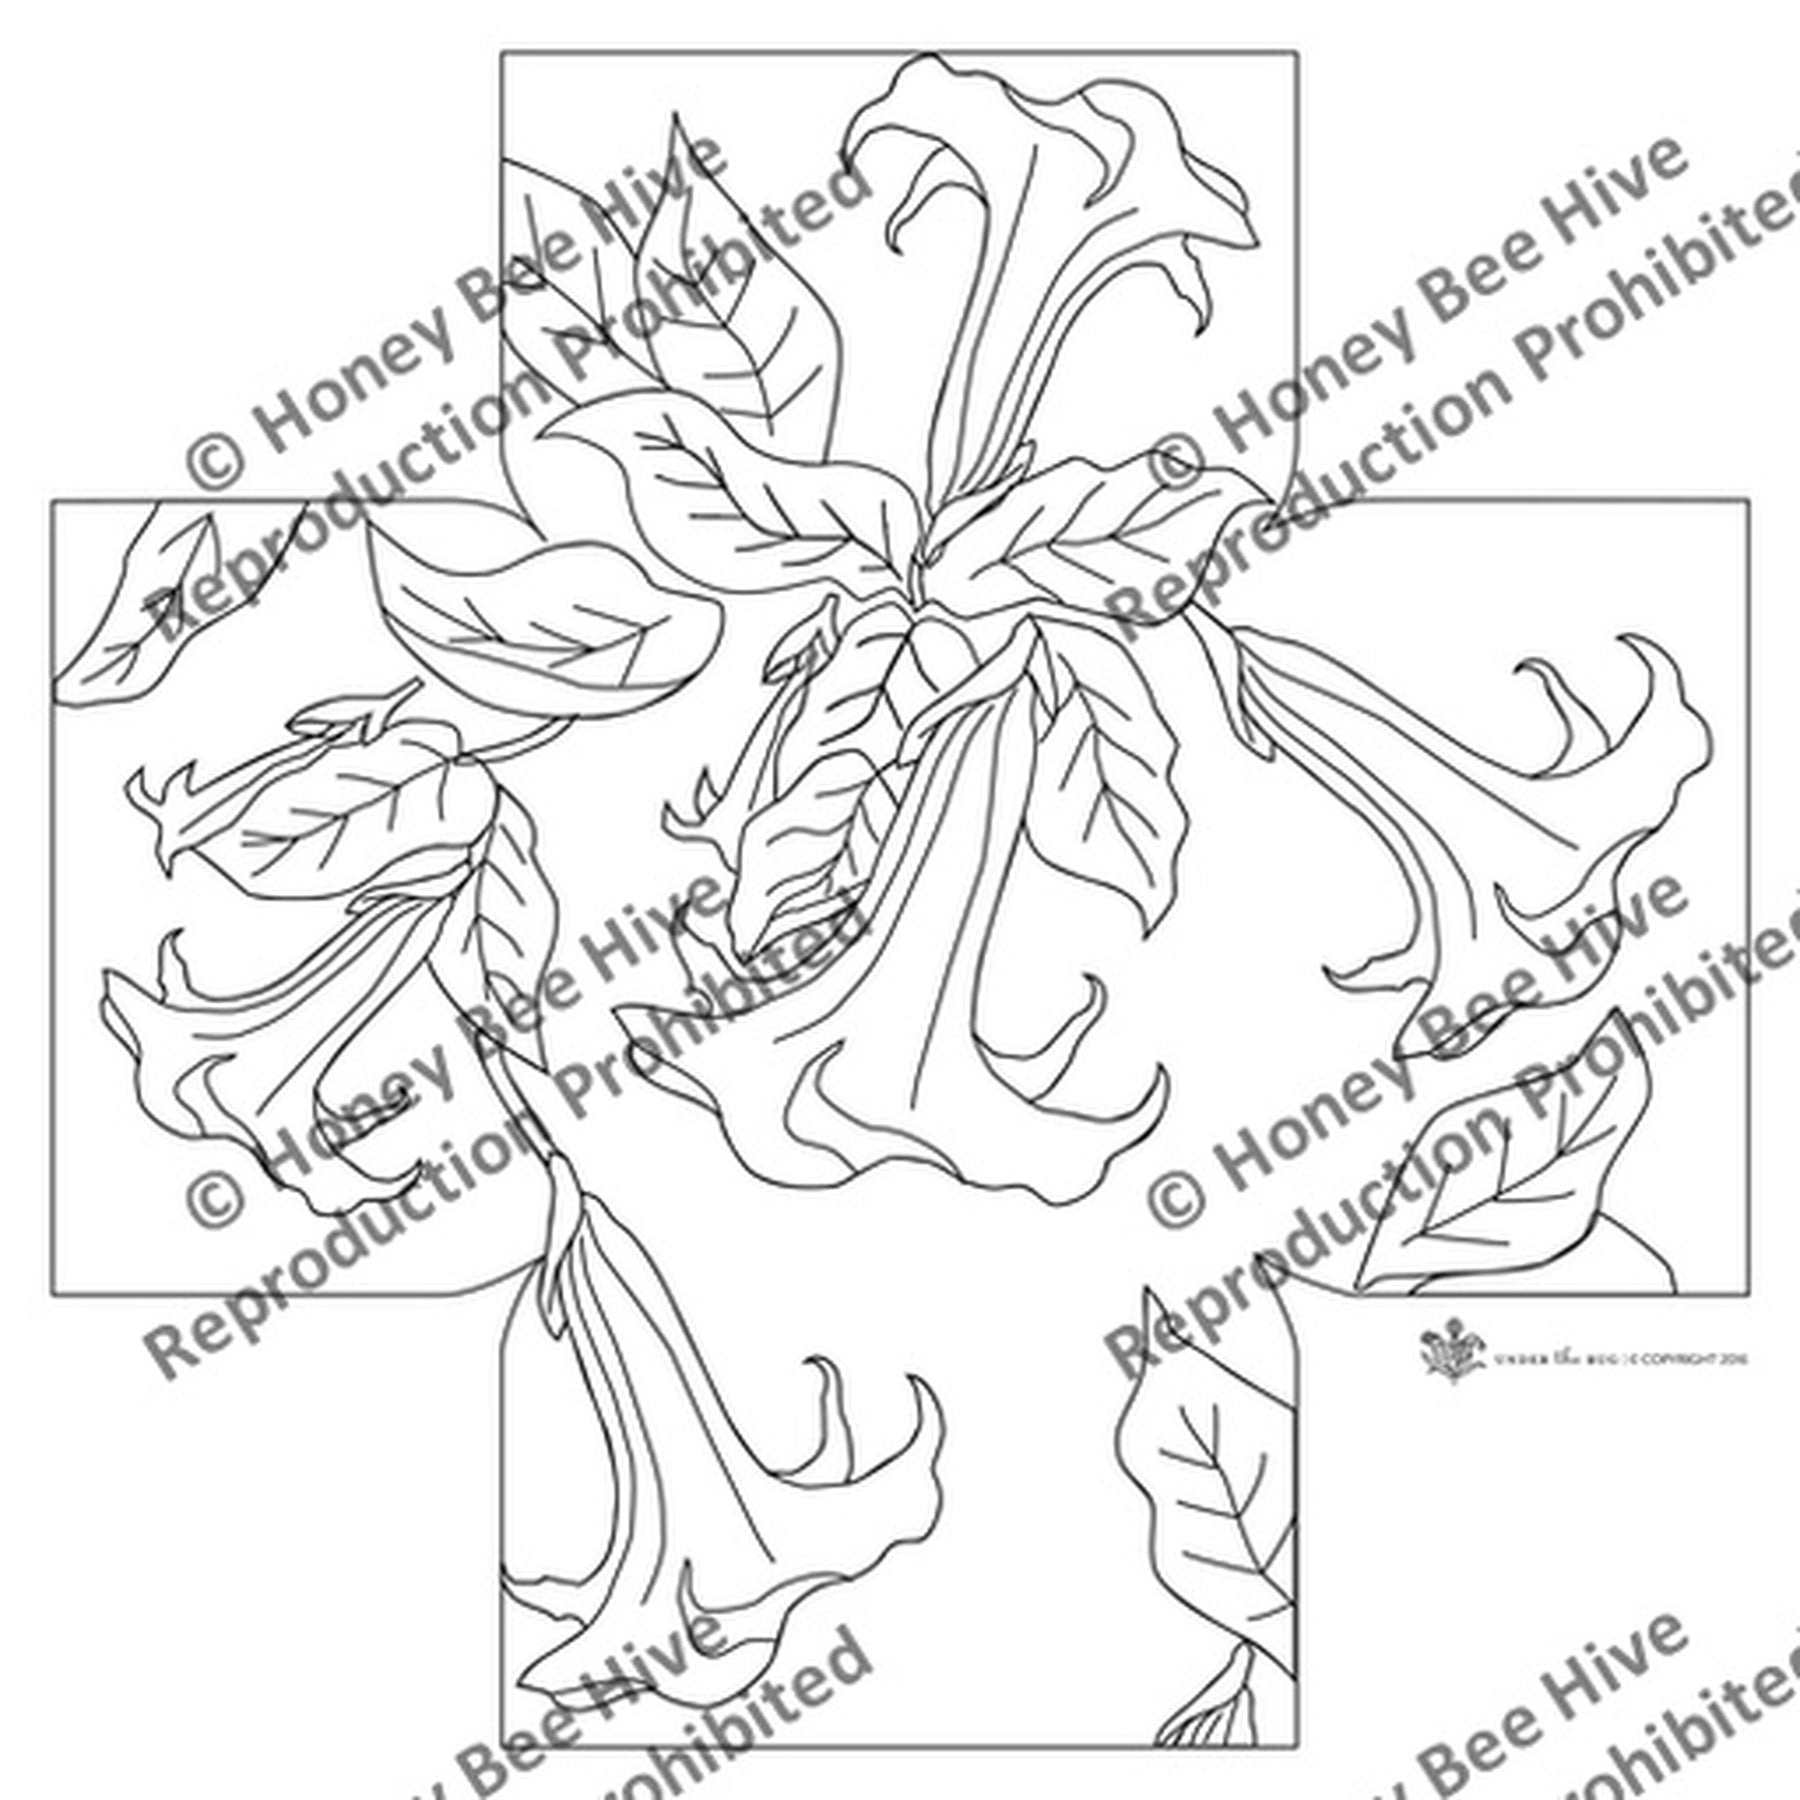 Trumpet Flowers - Square Footstool Pattern, rug hooking pattern